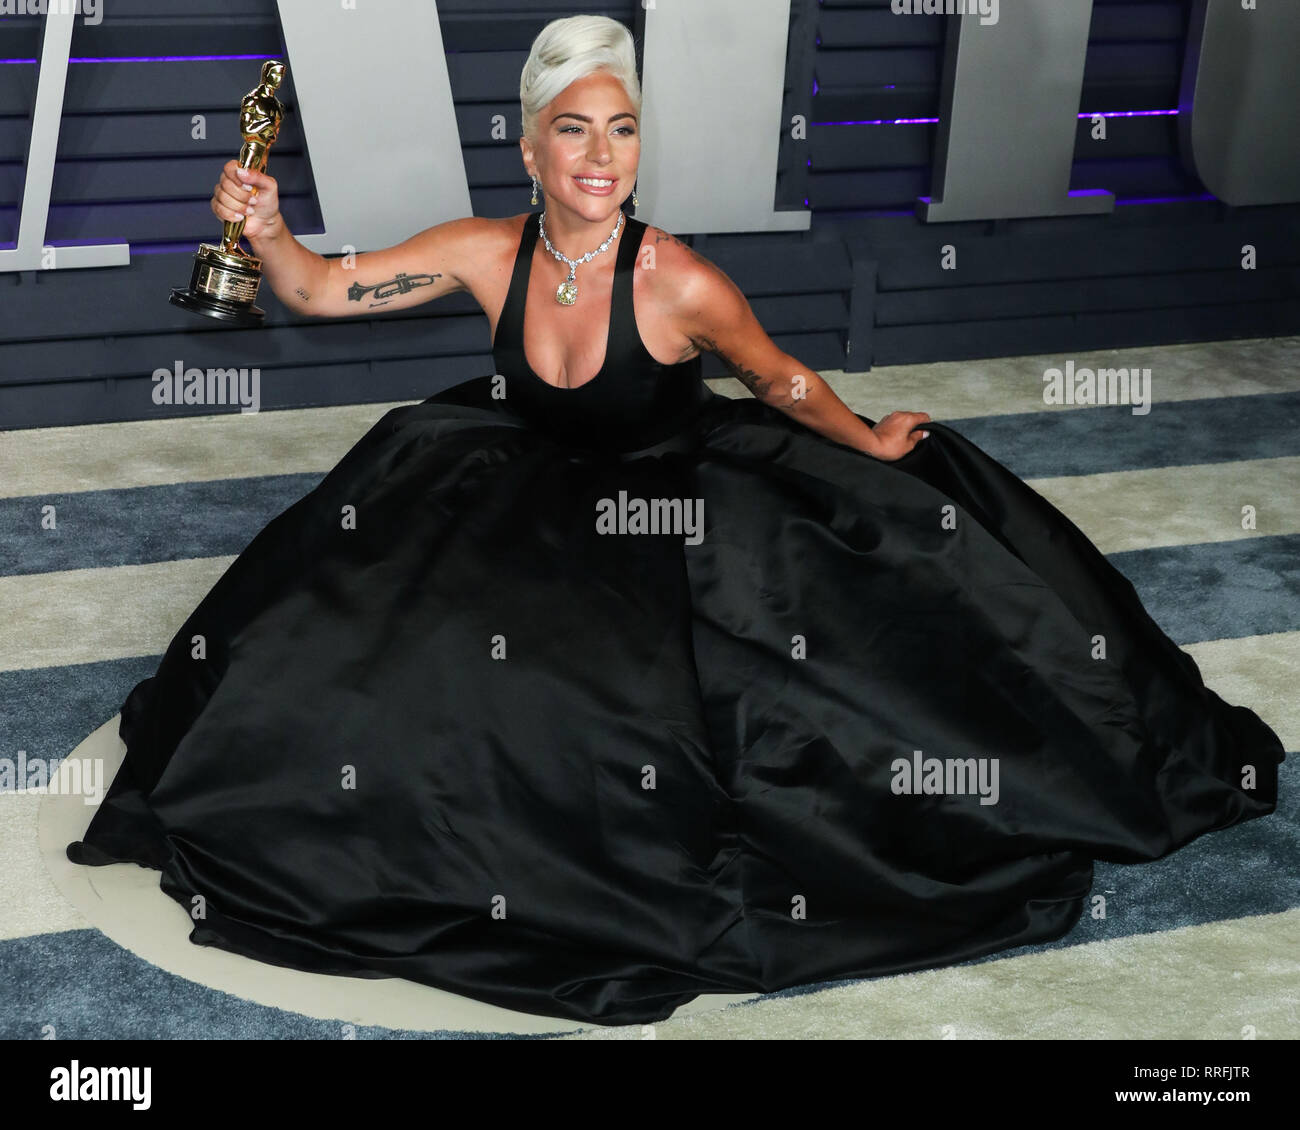 Lady Gaga Wore Project Runway Judge Brandon Maxwell's Dress 2019